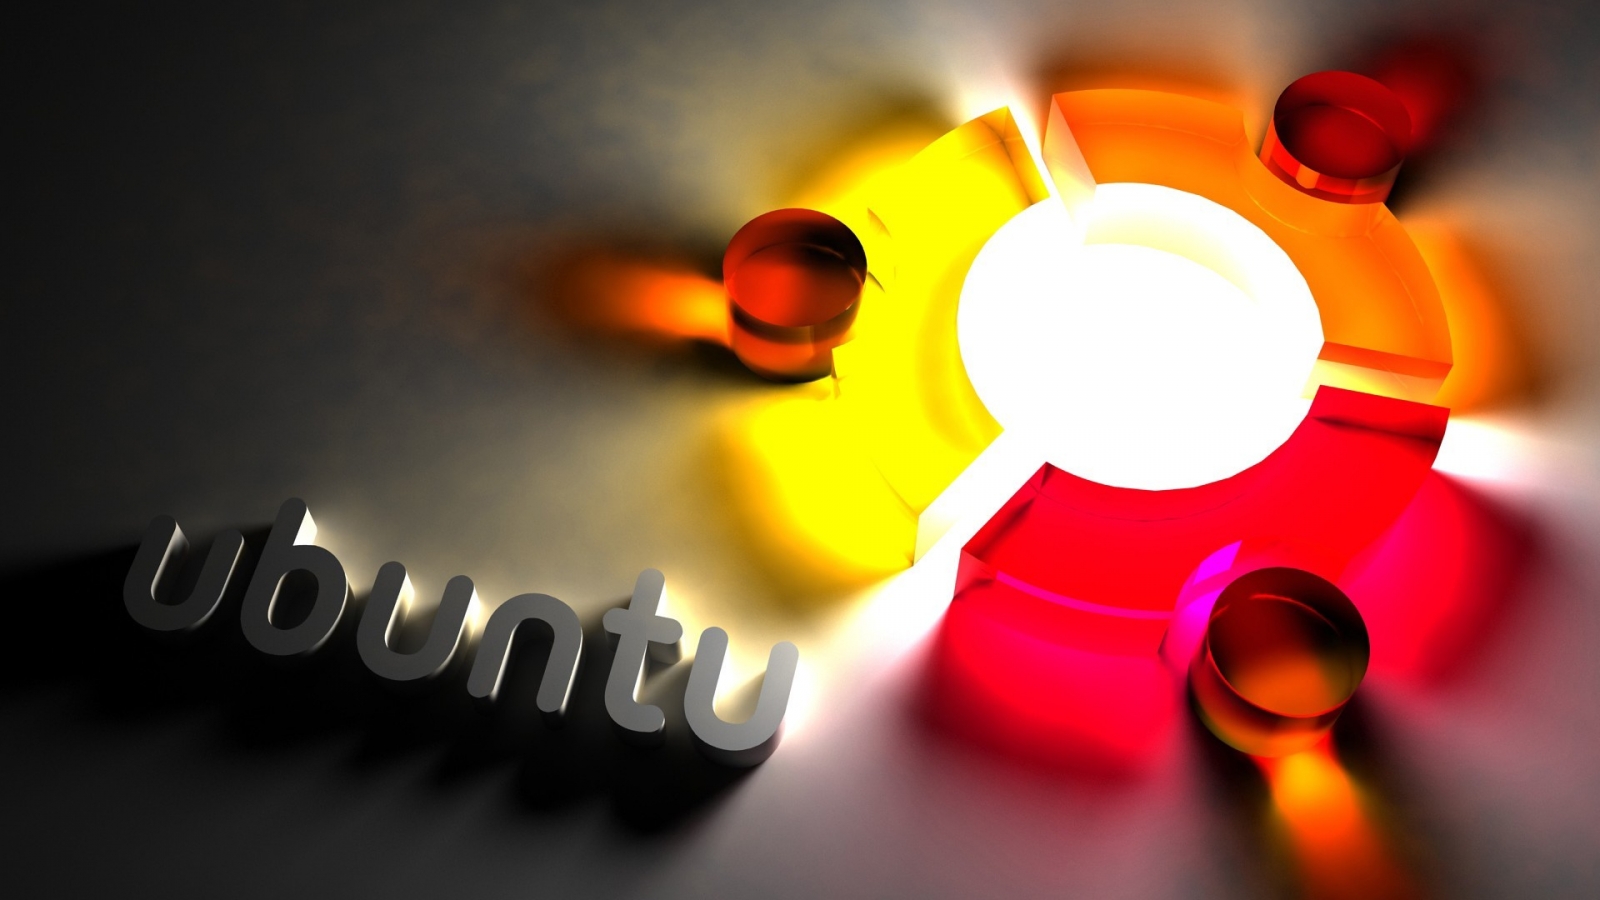 Ubuntu Cool Logo for 1600 x 900 HDTV resolution